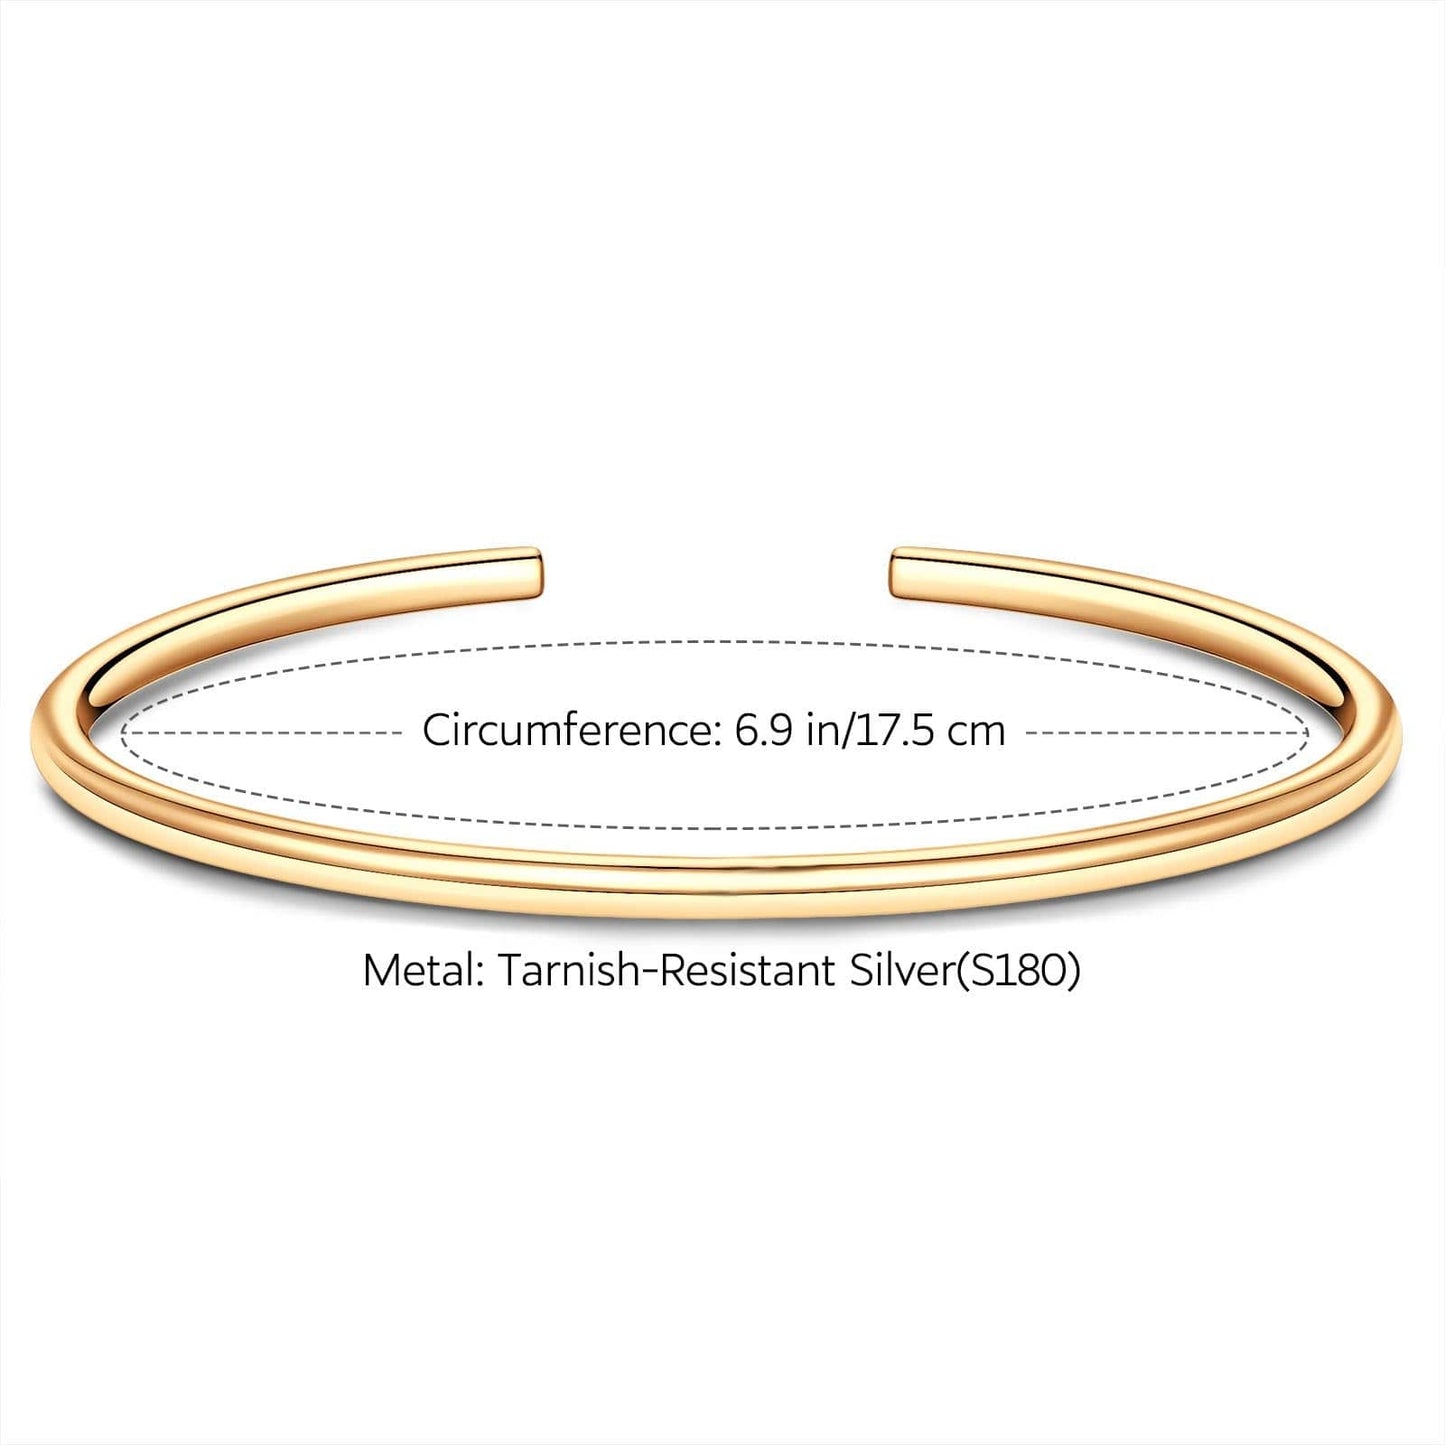 Classic Cuff Bracelet Tarnish-resistant Silver Bracelet In 14K Gold Plated